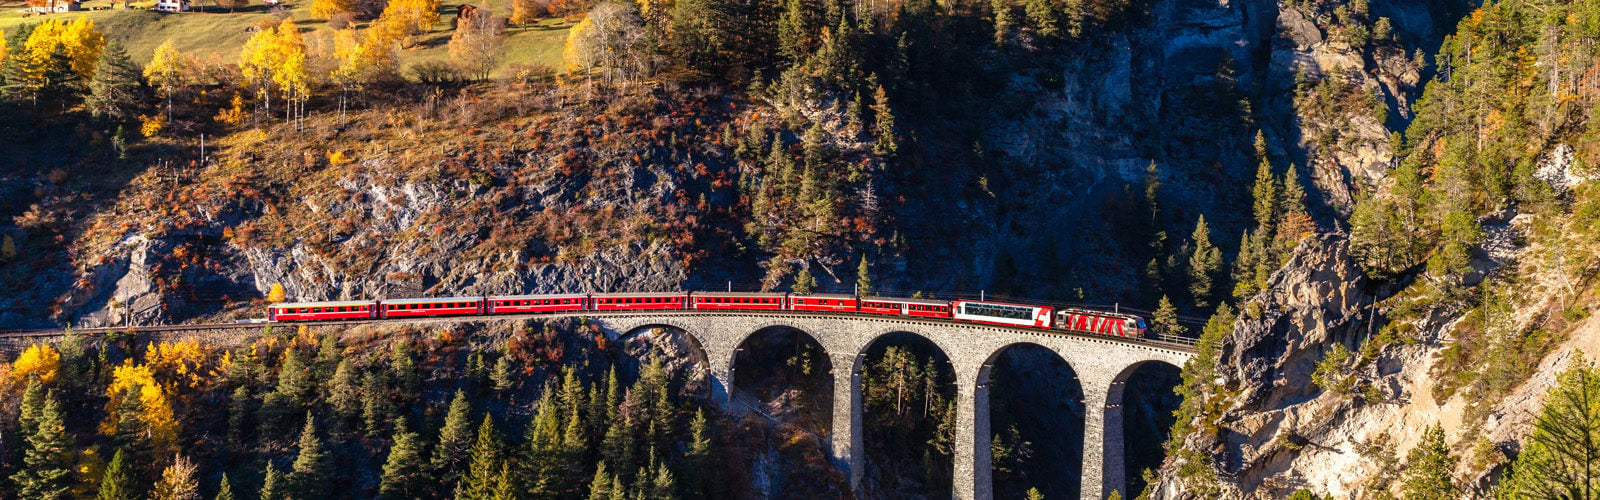 The Gornergrad train running over the Landvasser Viaduct in the Swiss mountains